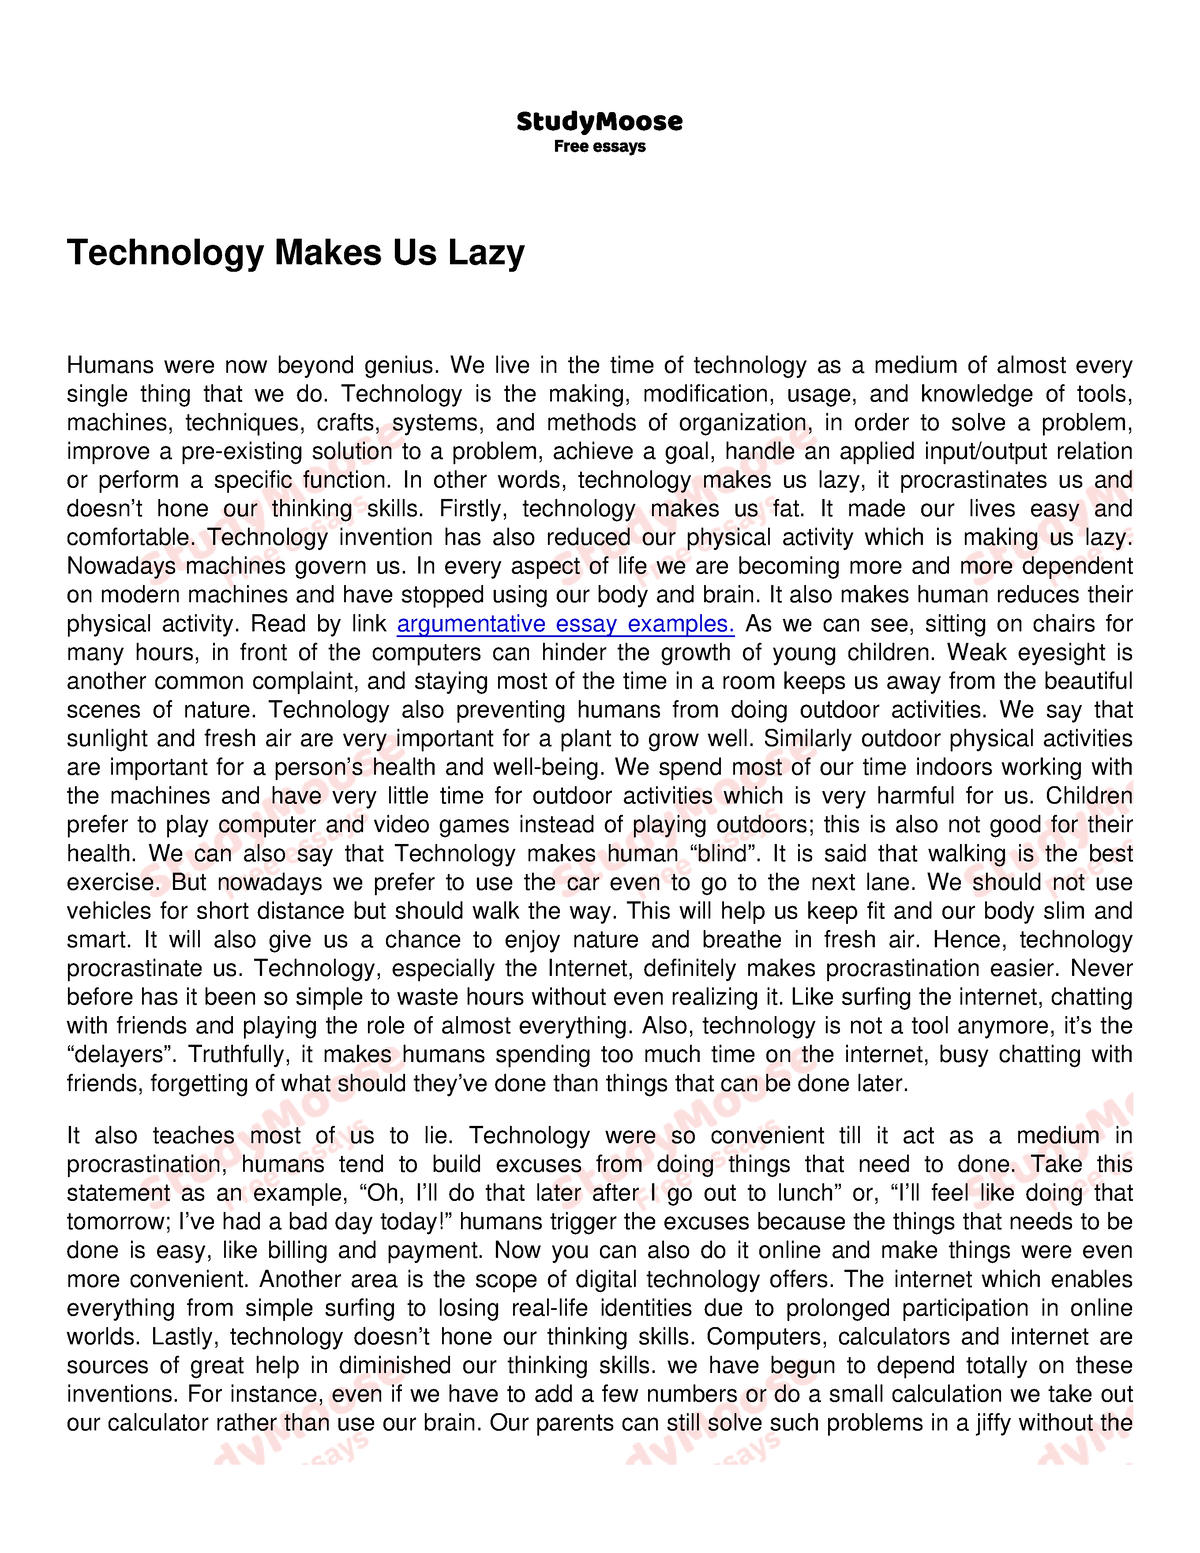 technology has made us lazy essay